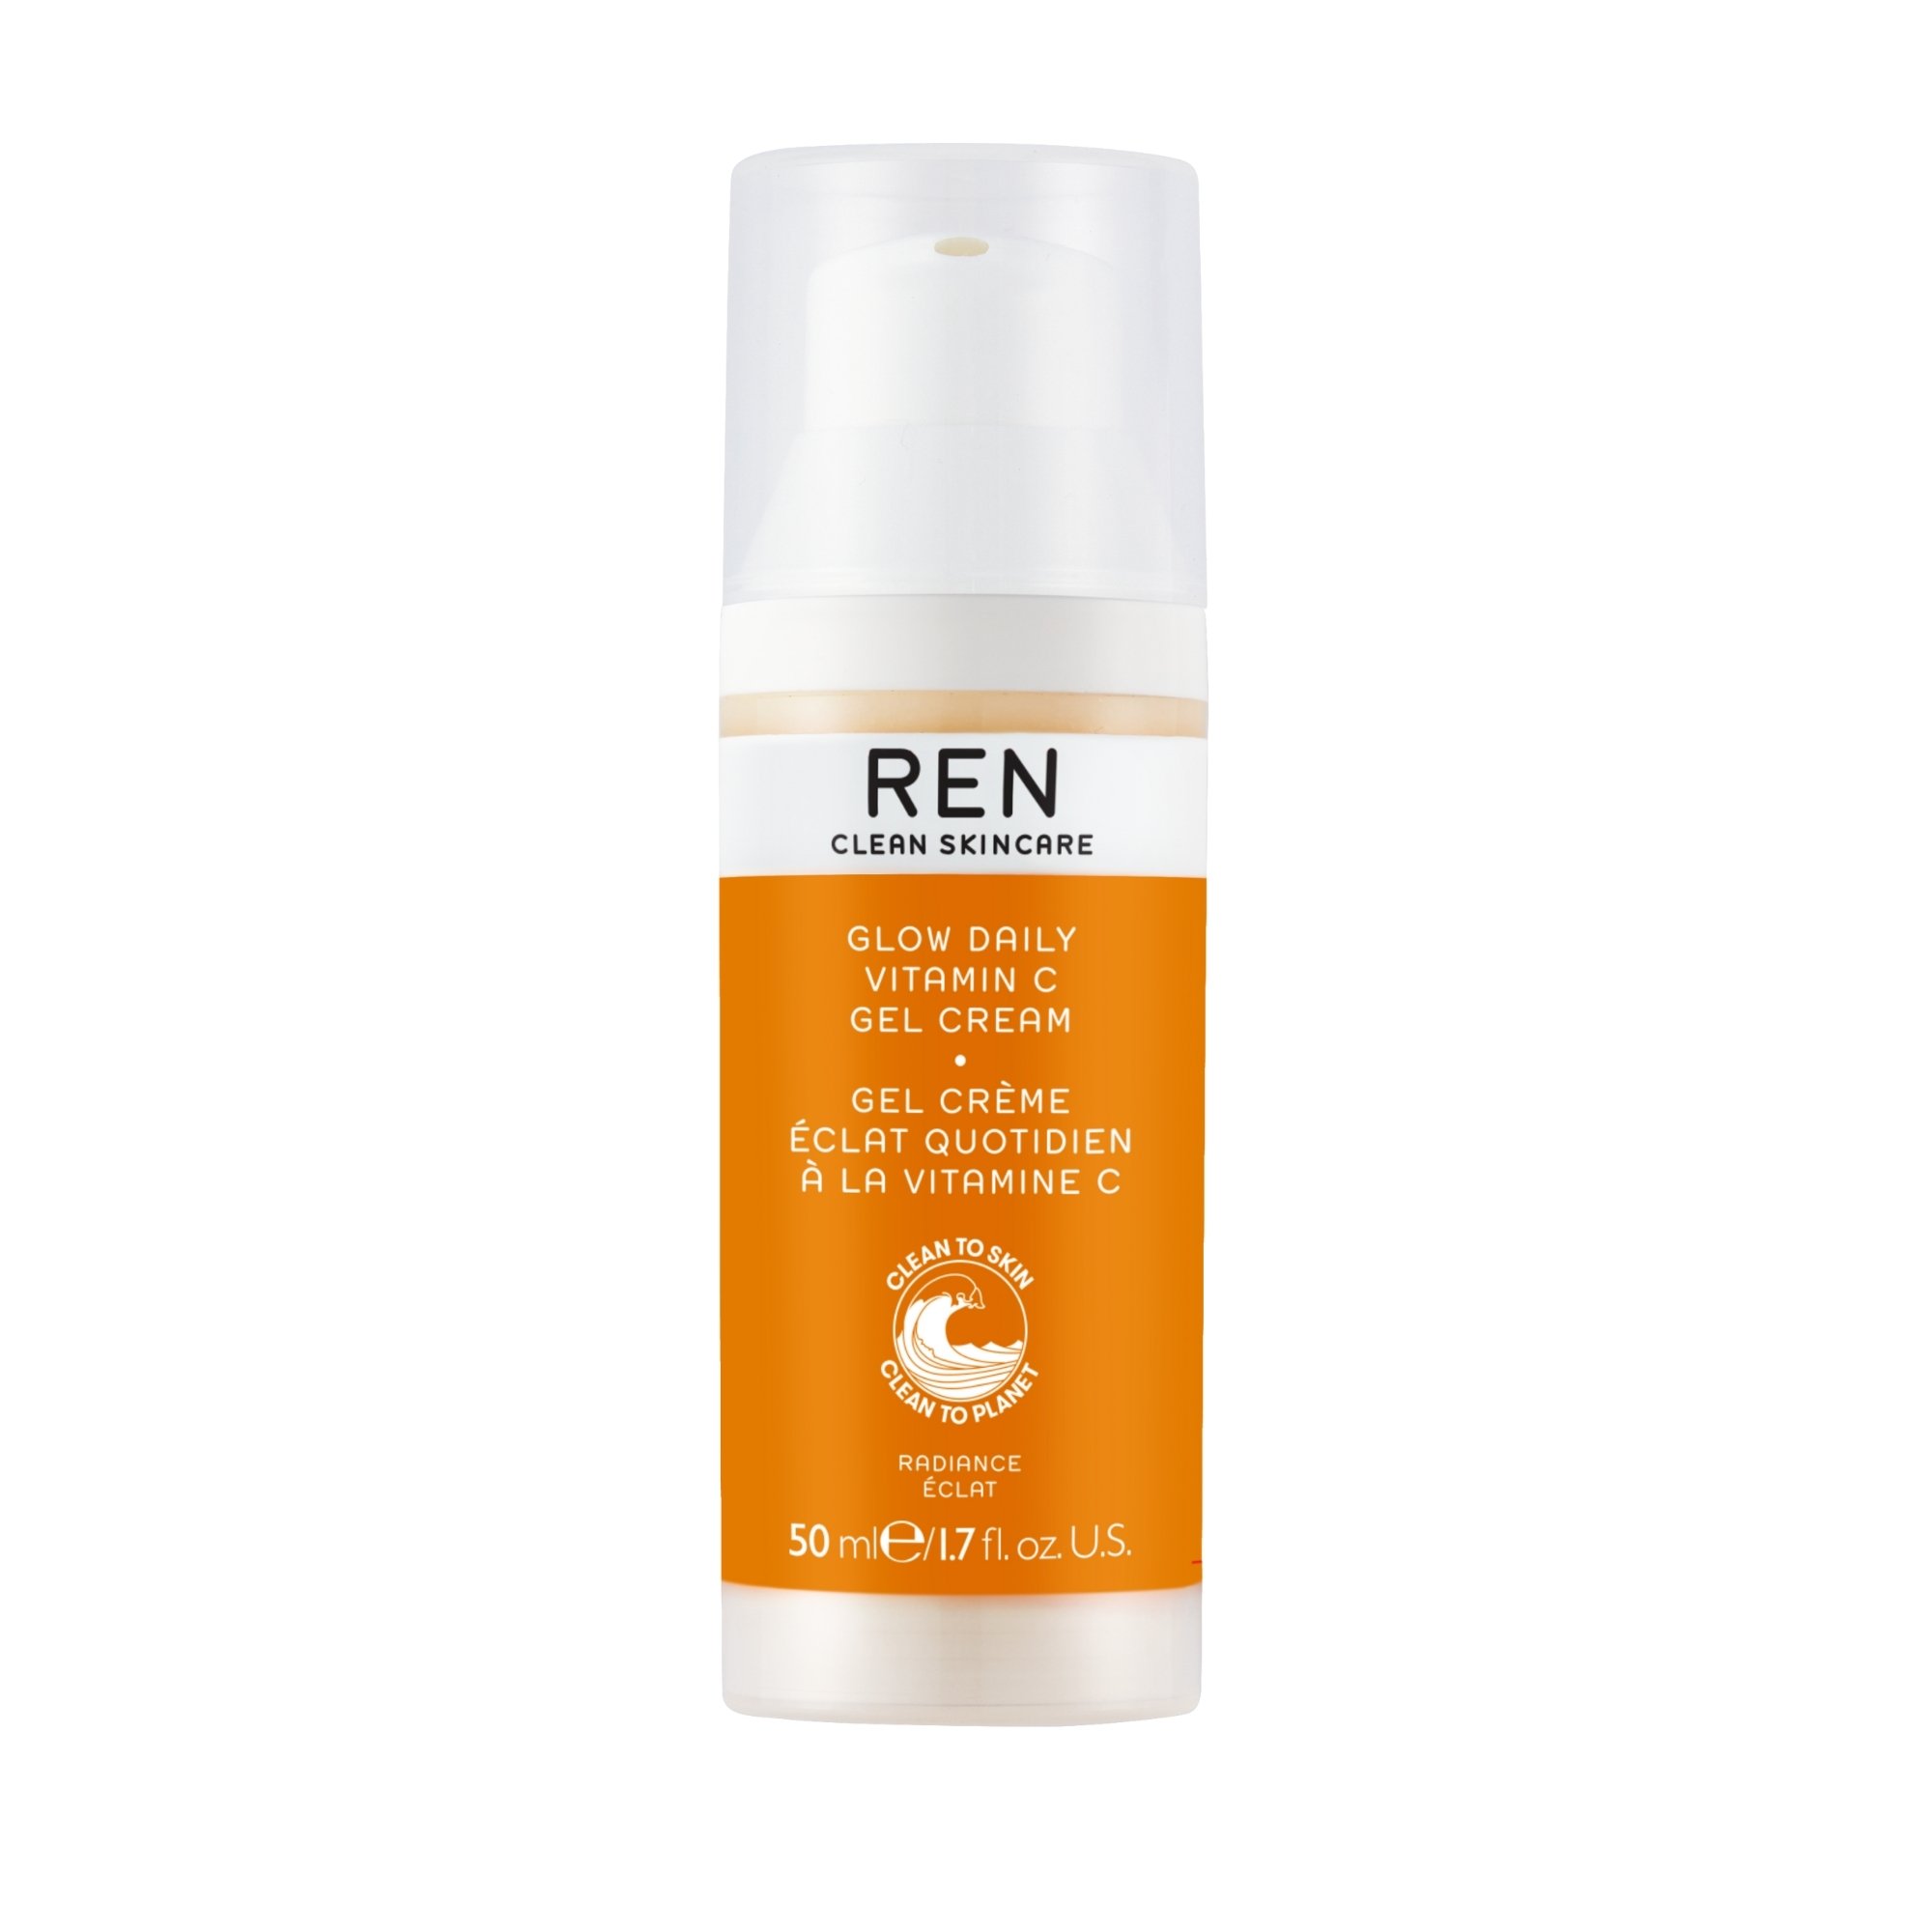 REN - Vegan Radiance Glow Daily Vitamin C Gel Cream 50 ml